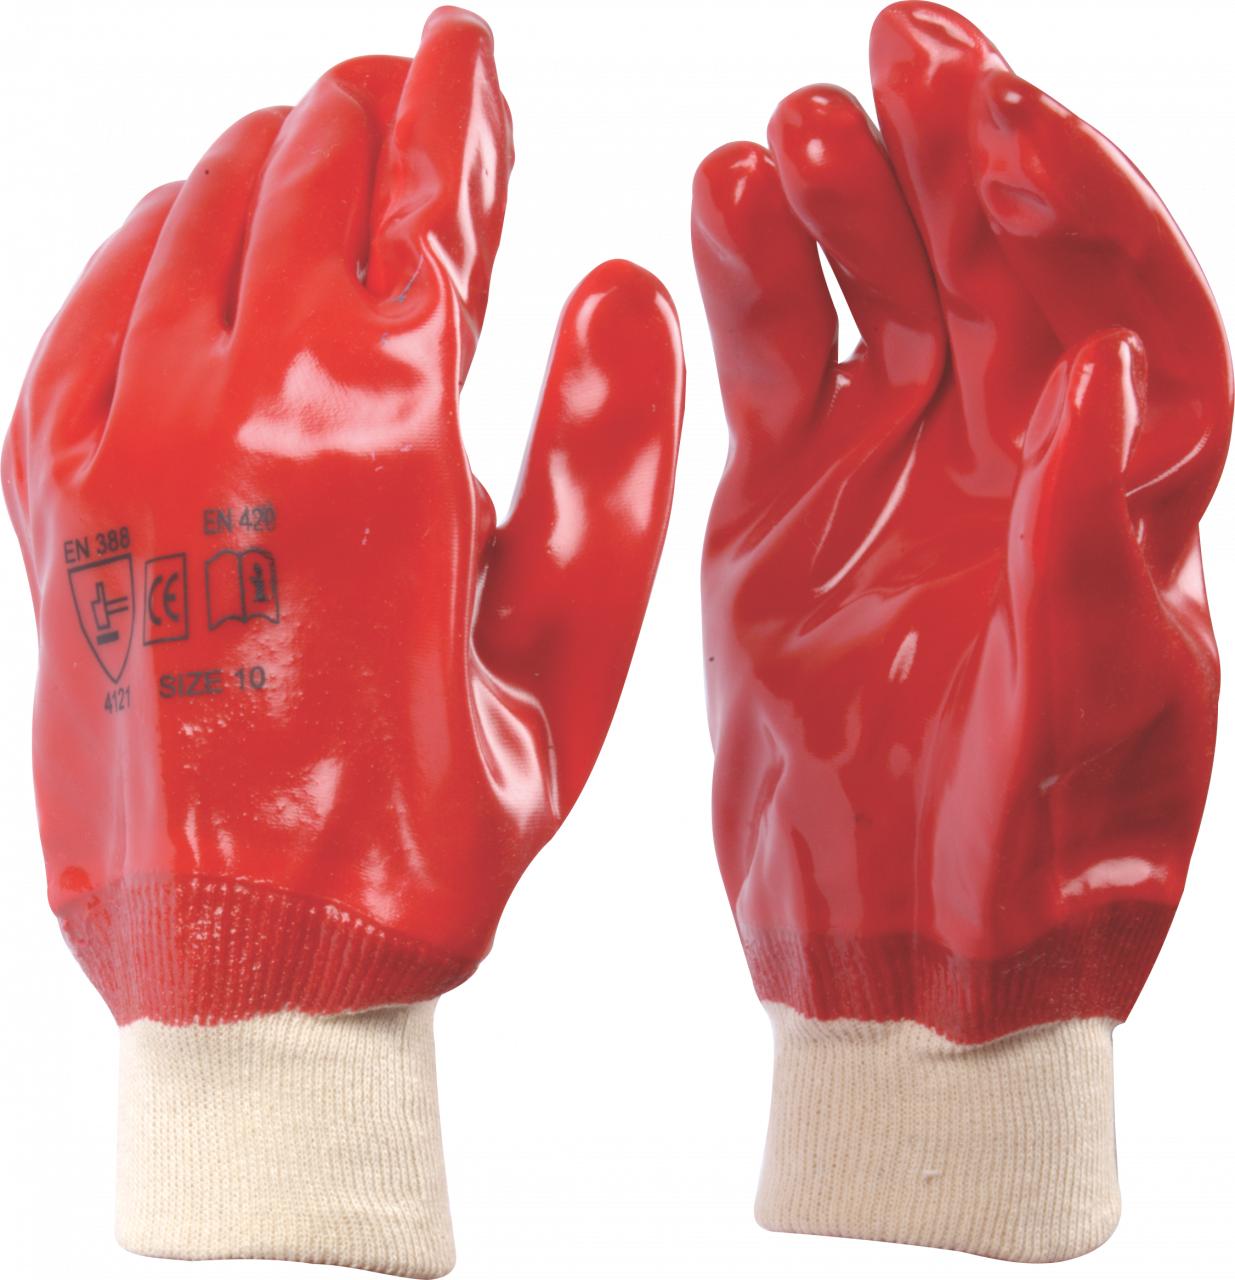 Glove Pvc Open Cuff Red Medium Weight